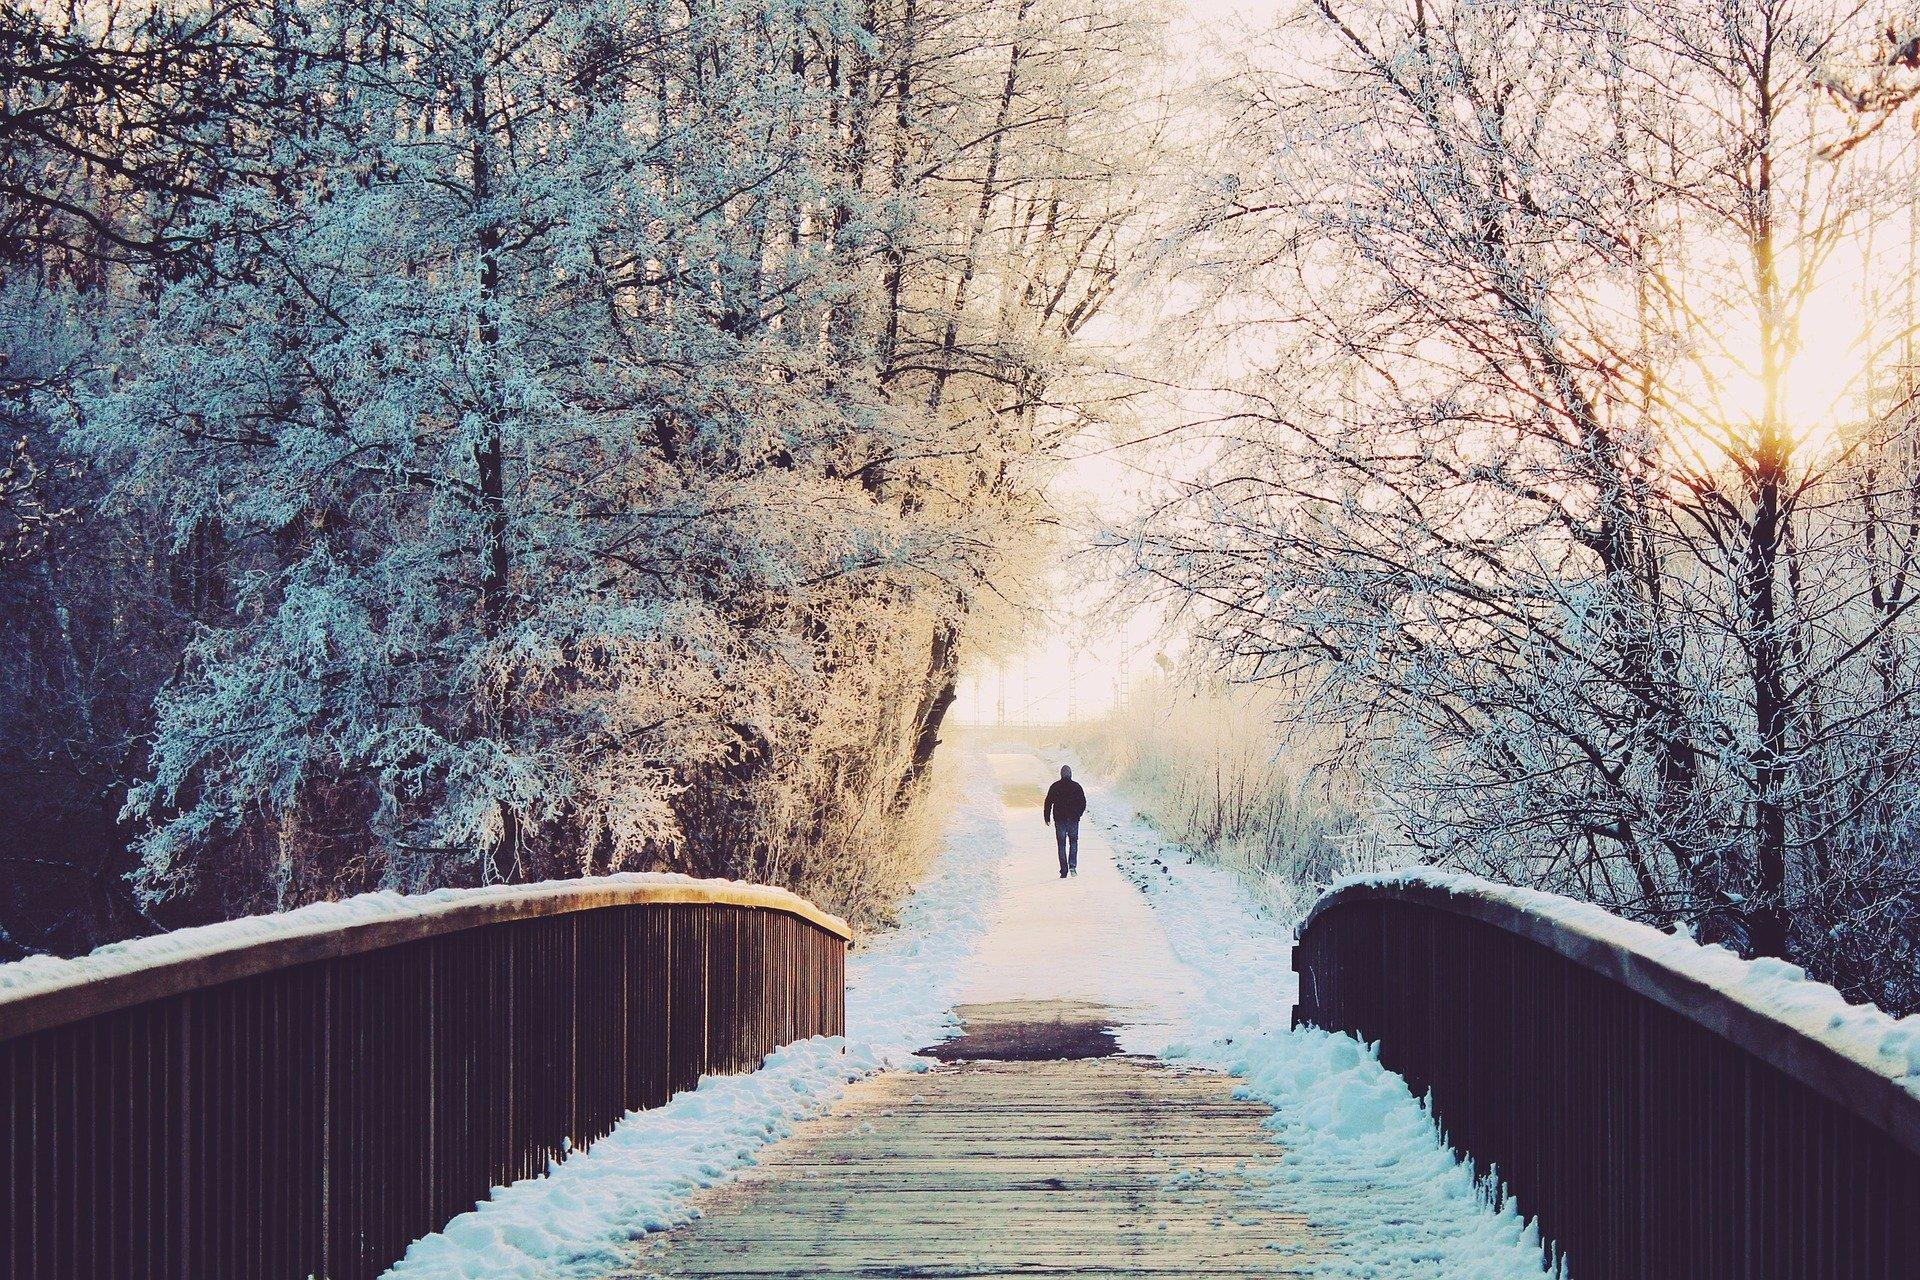 Одиночество / Loneliness | Снег пушистый, Свет и тени. Одино… | Flickr